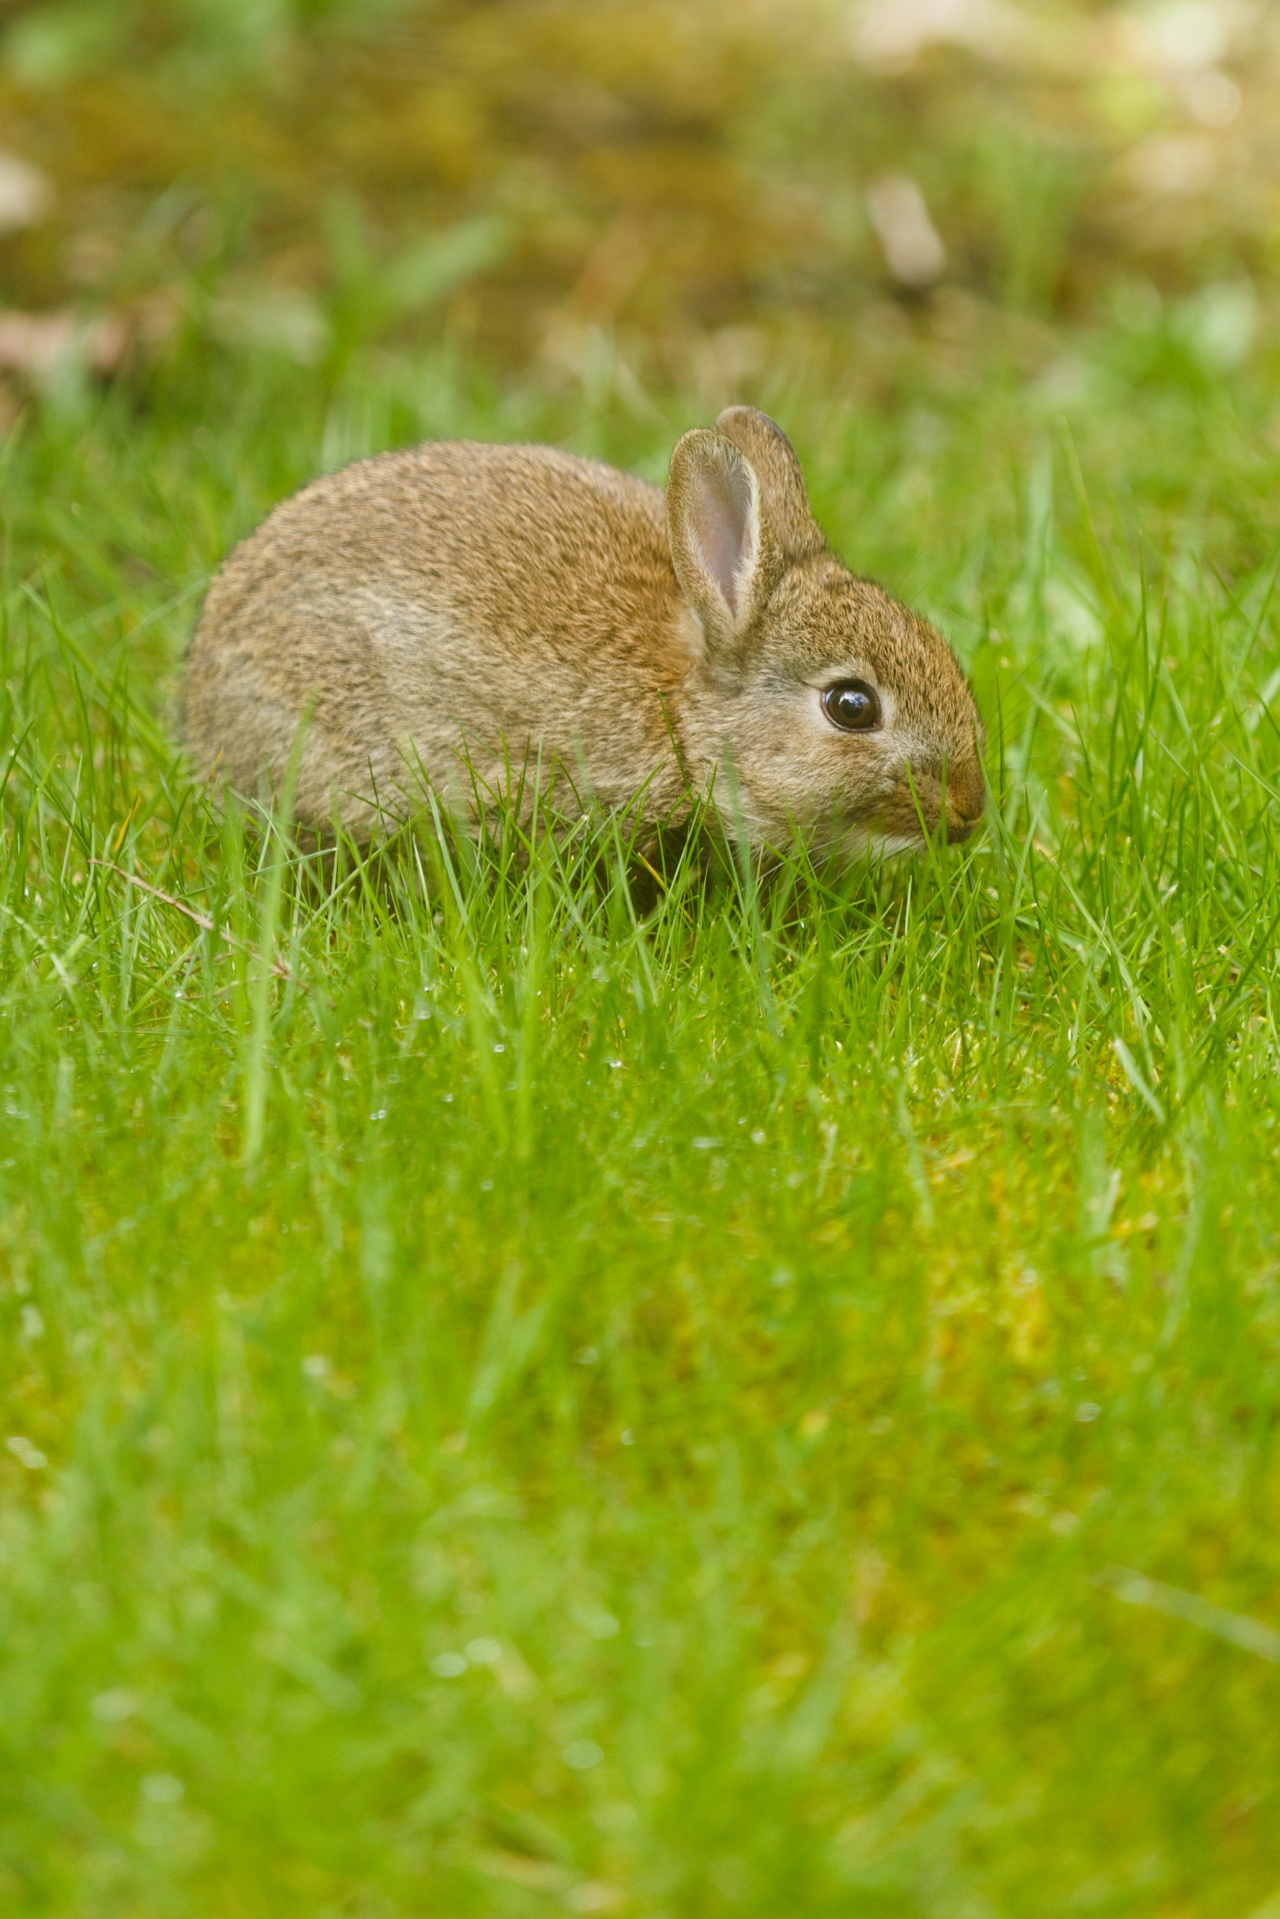 Little Bunny On Grass